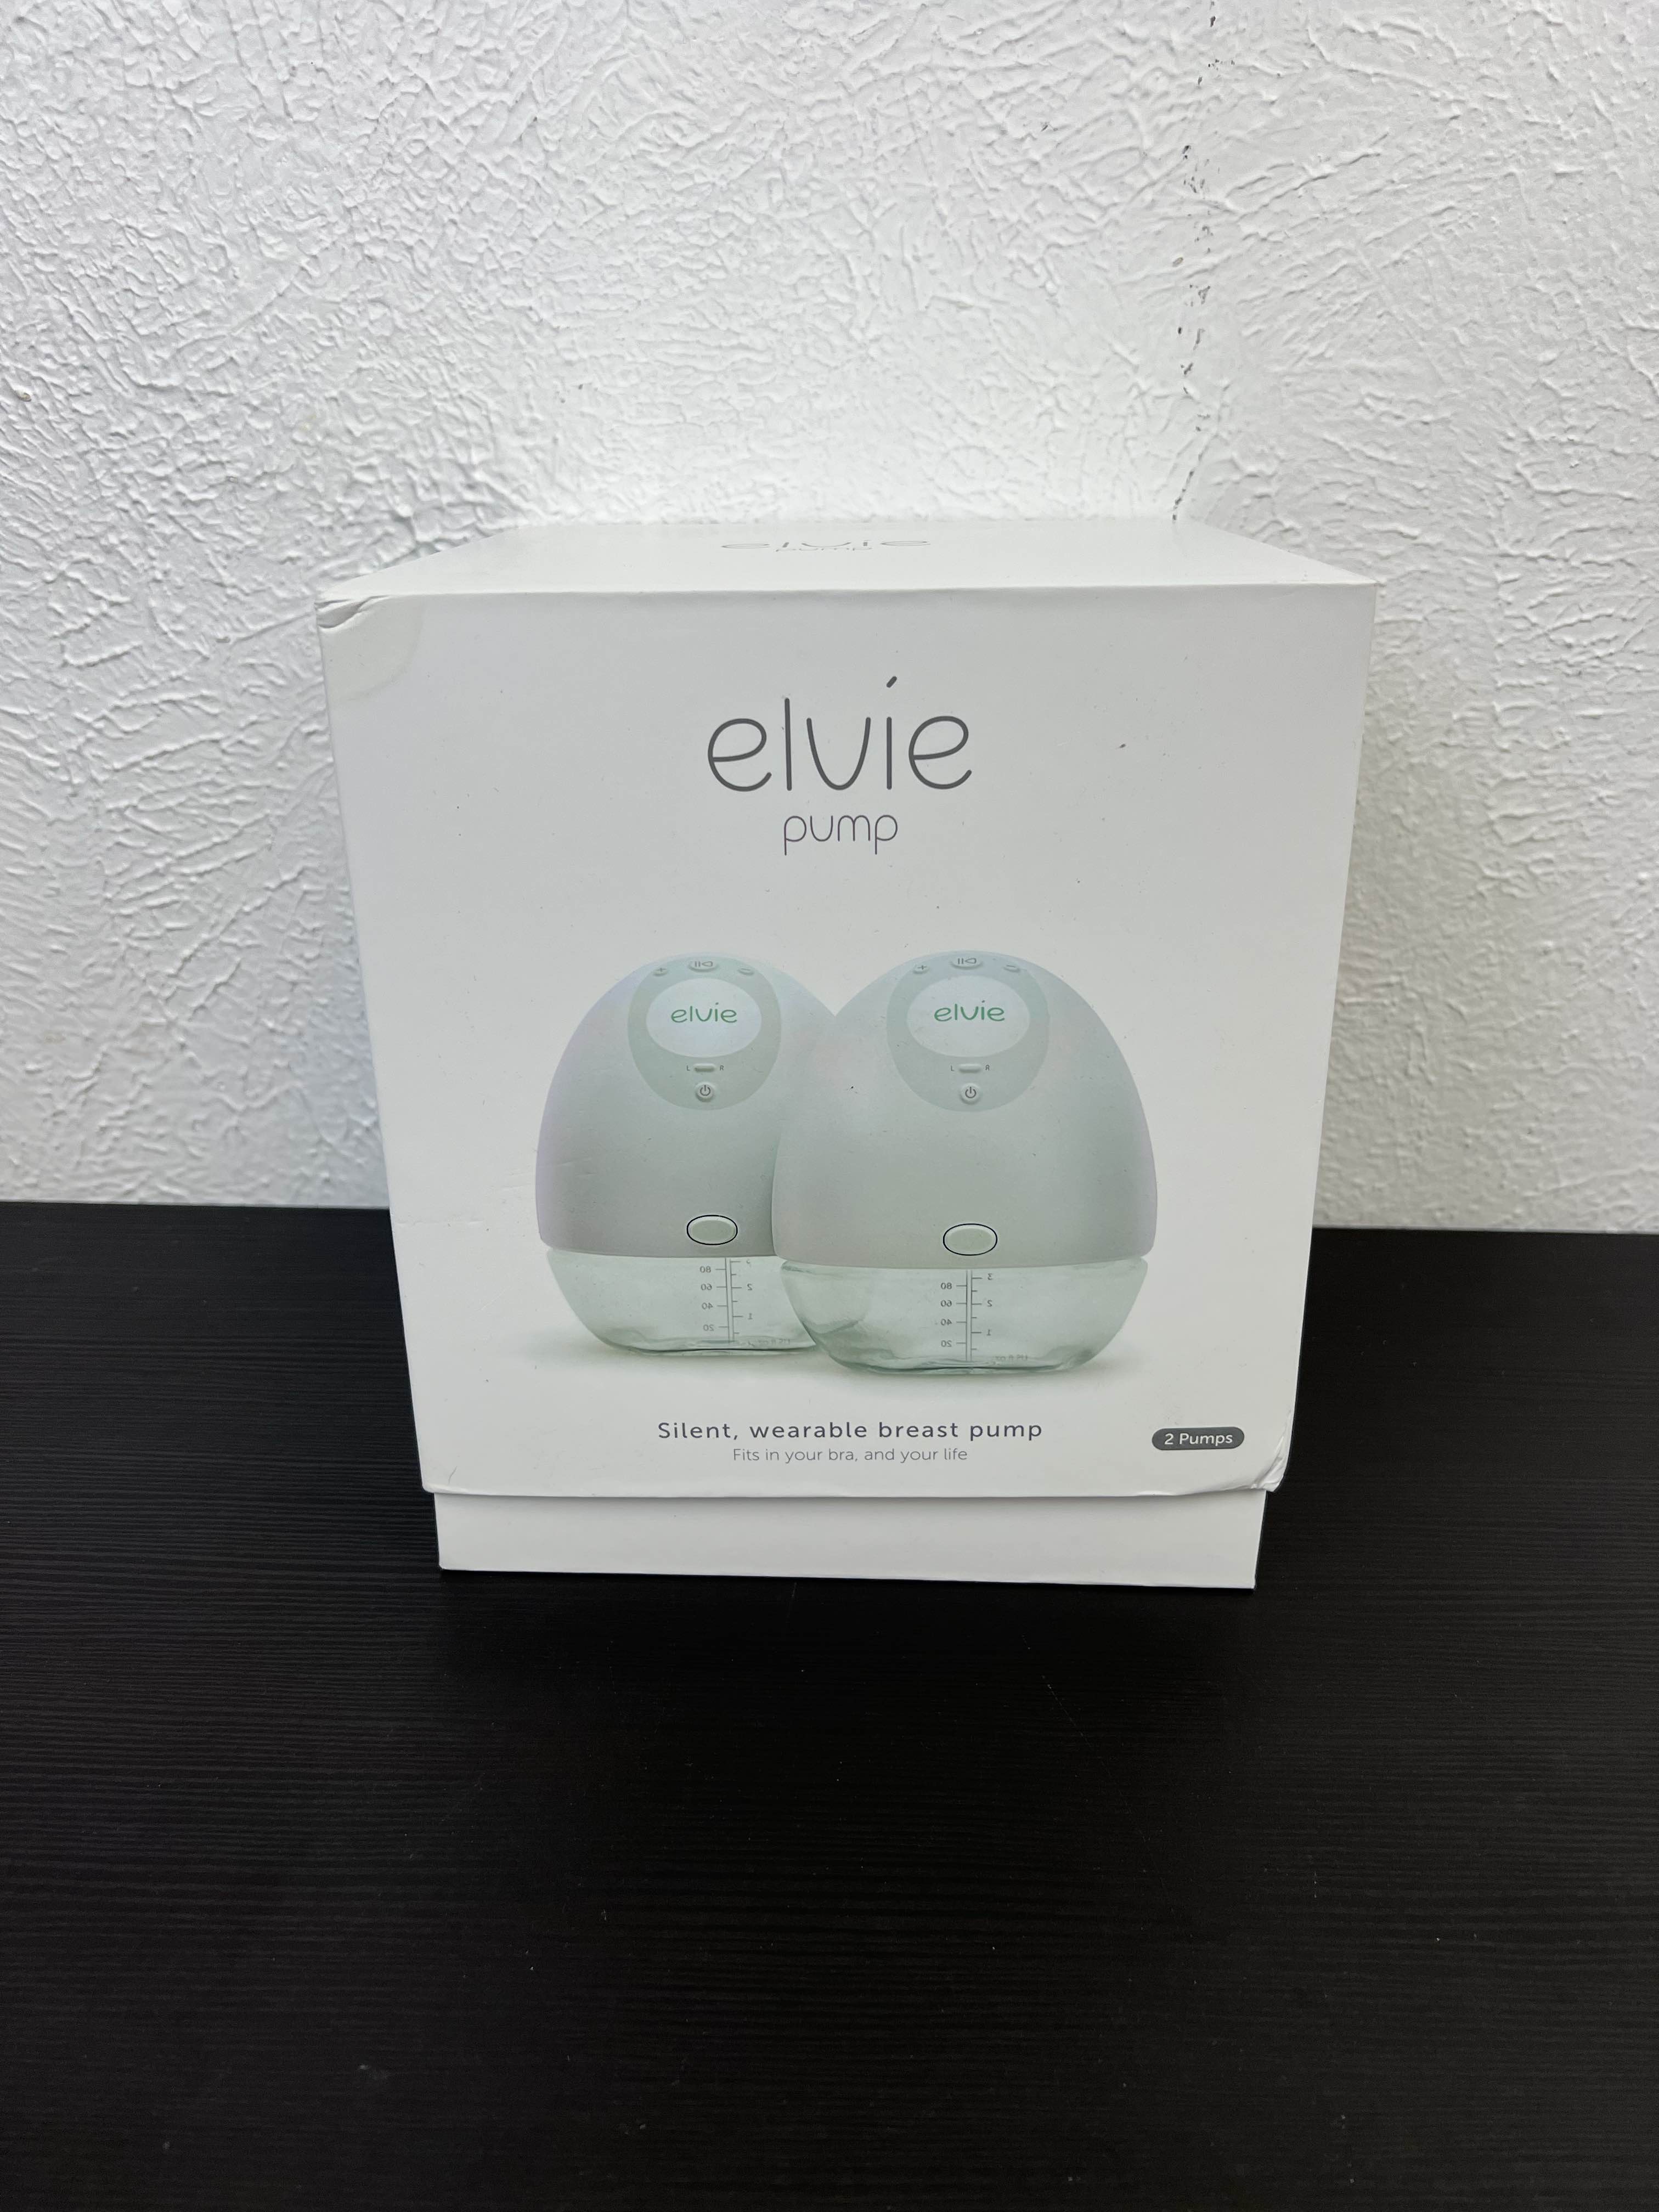 elvie pump - double electric breast pump